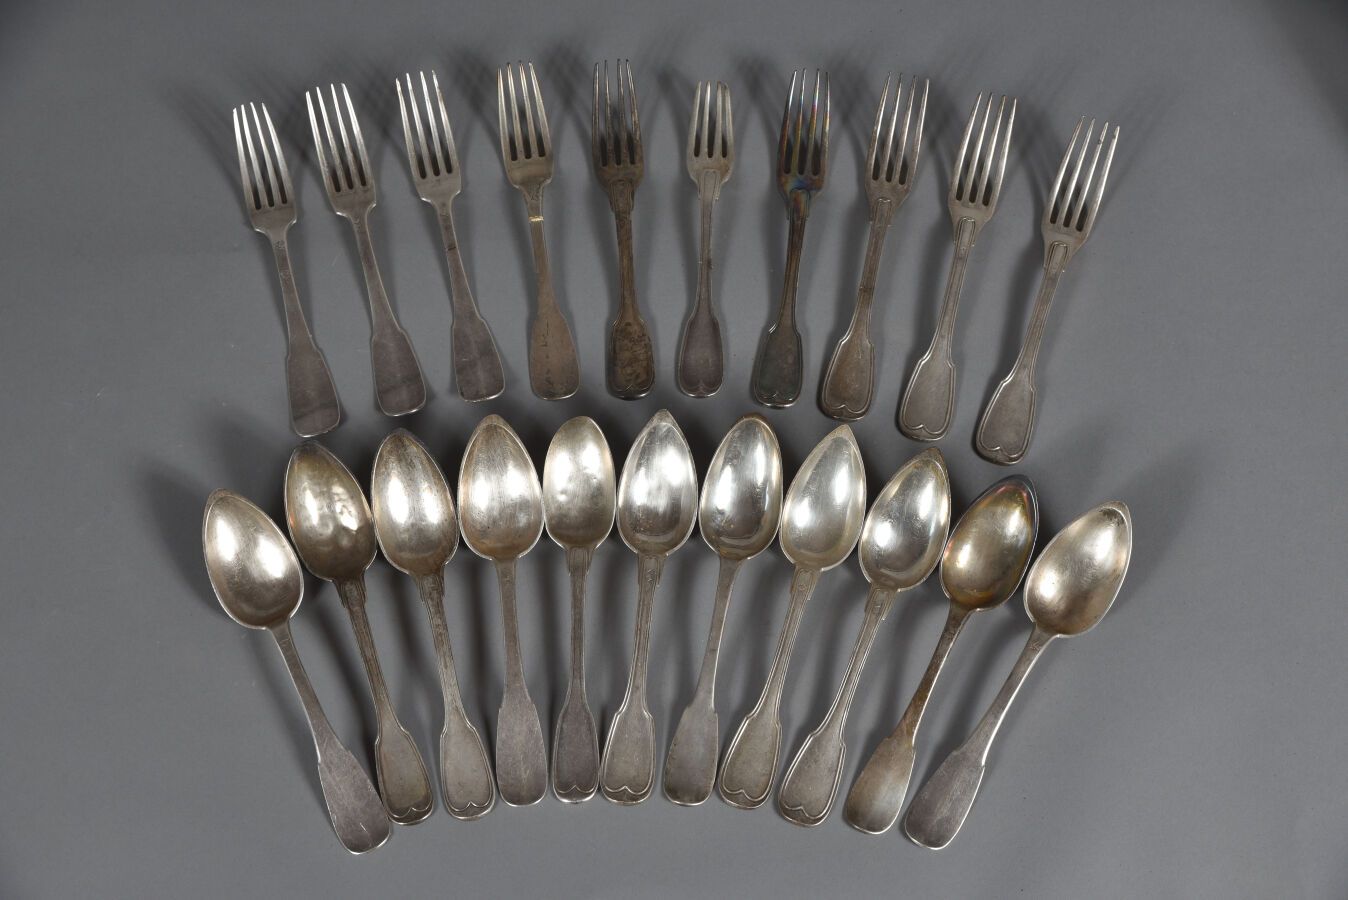 Null 一套银质餐具，锉刀或平纹，有些雕刻，有些浮雕，包括10个叉子和11个勺子。
有fermiers généraux, Coq和Vieillard的印记。&hellip;